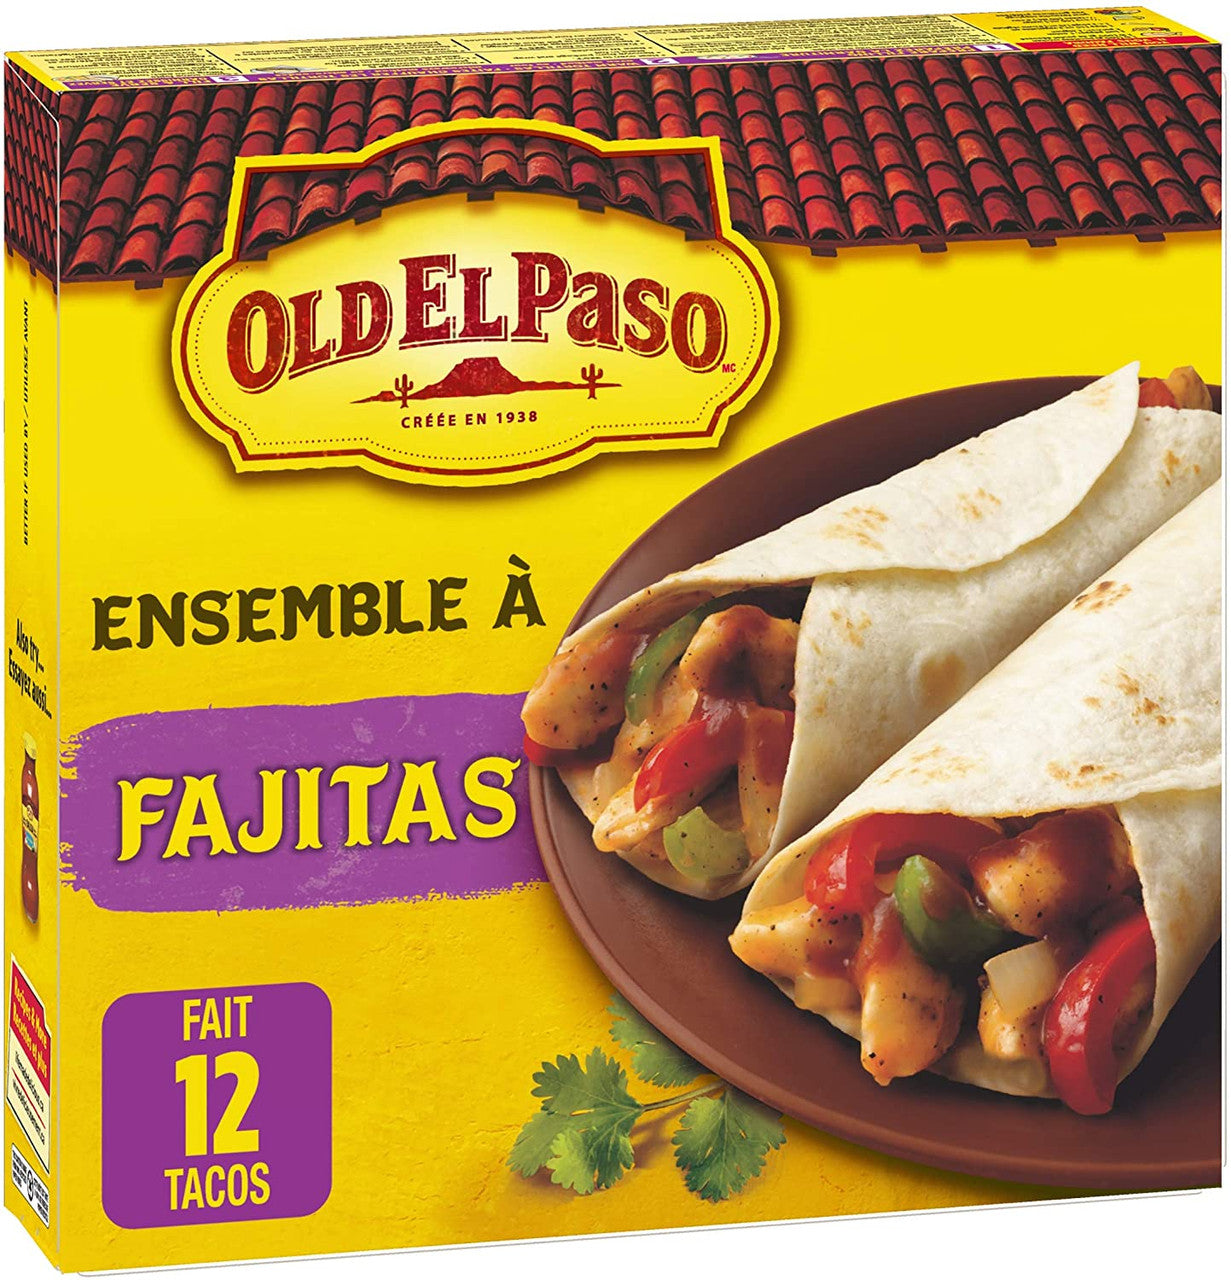 Old El Paso Fajita Dinner Kit, Makes 12 Tortillas, 400g/14.1 oz., Box, {Imported from Canada}